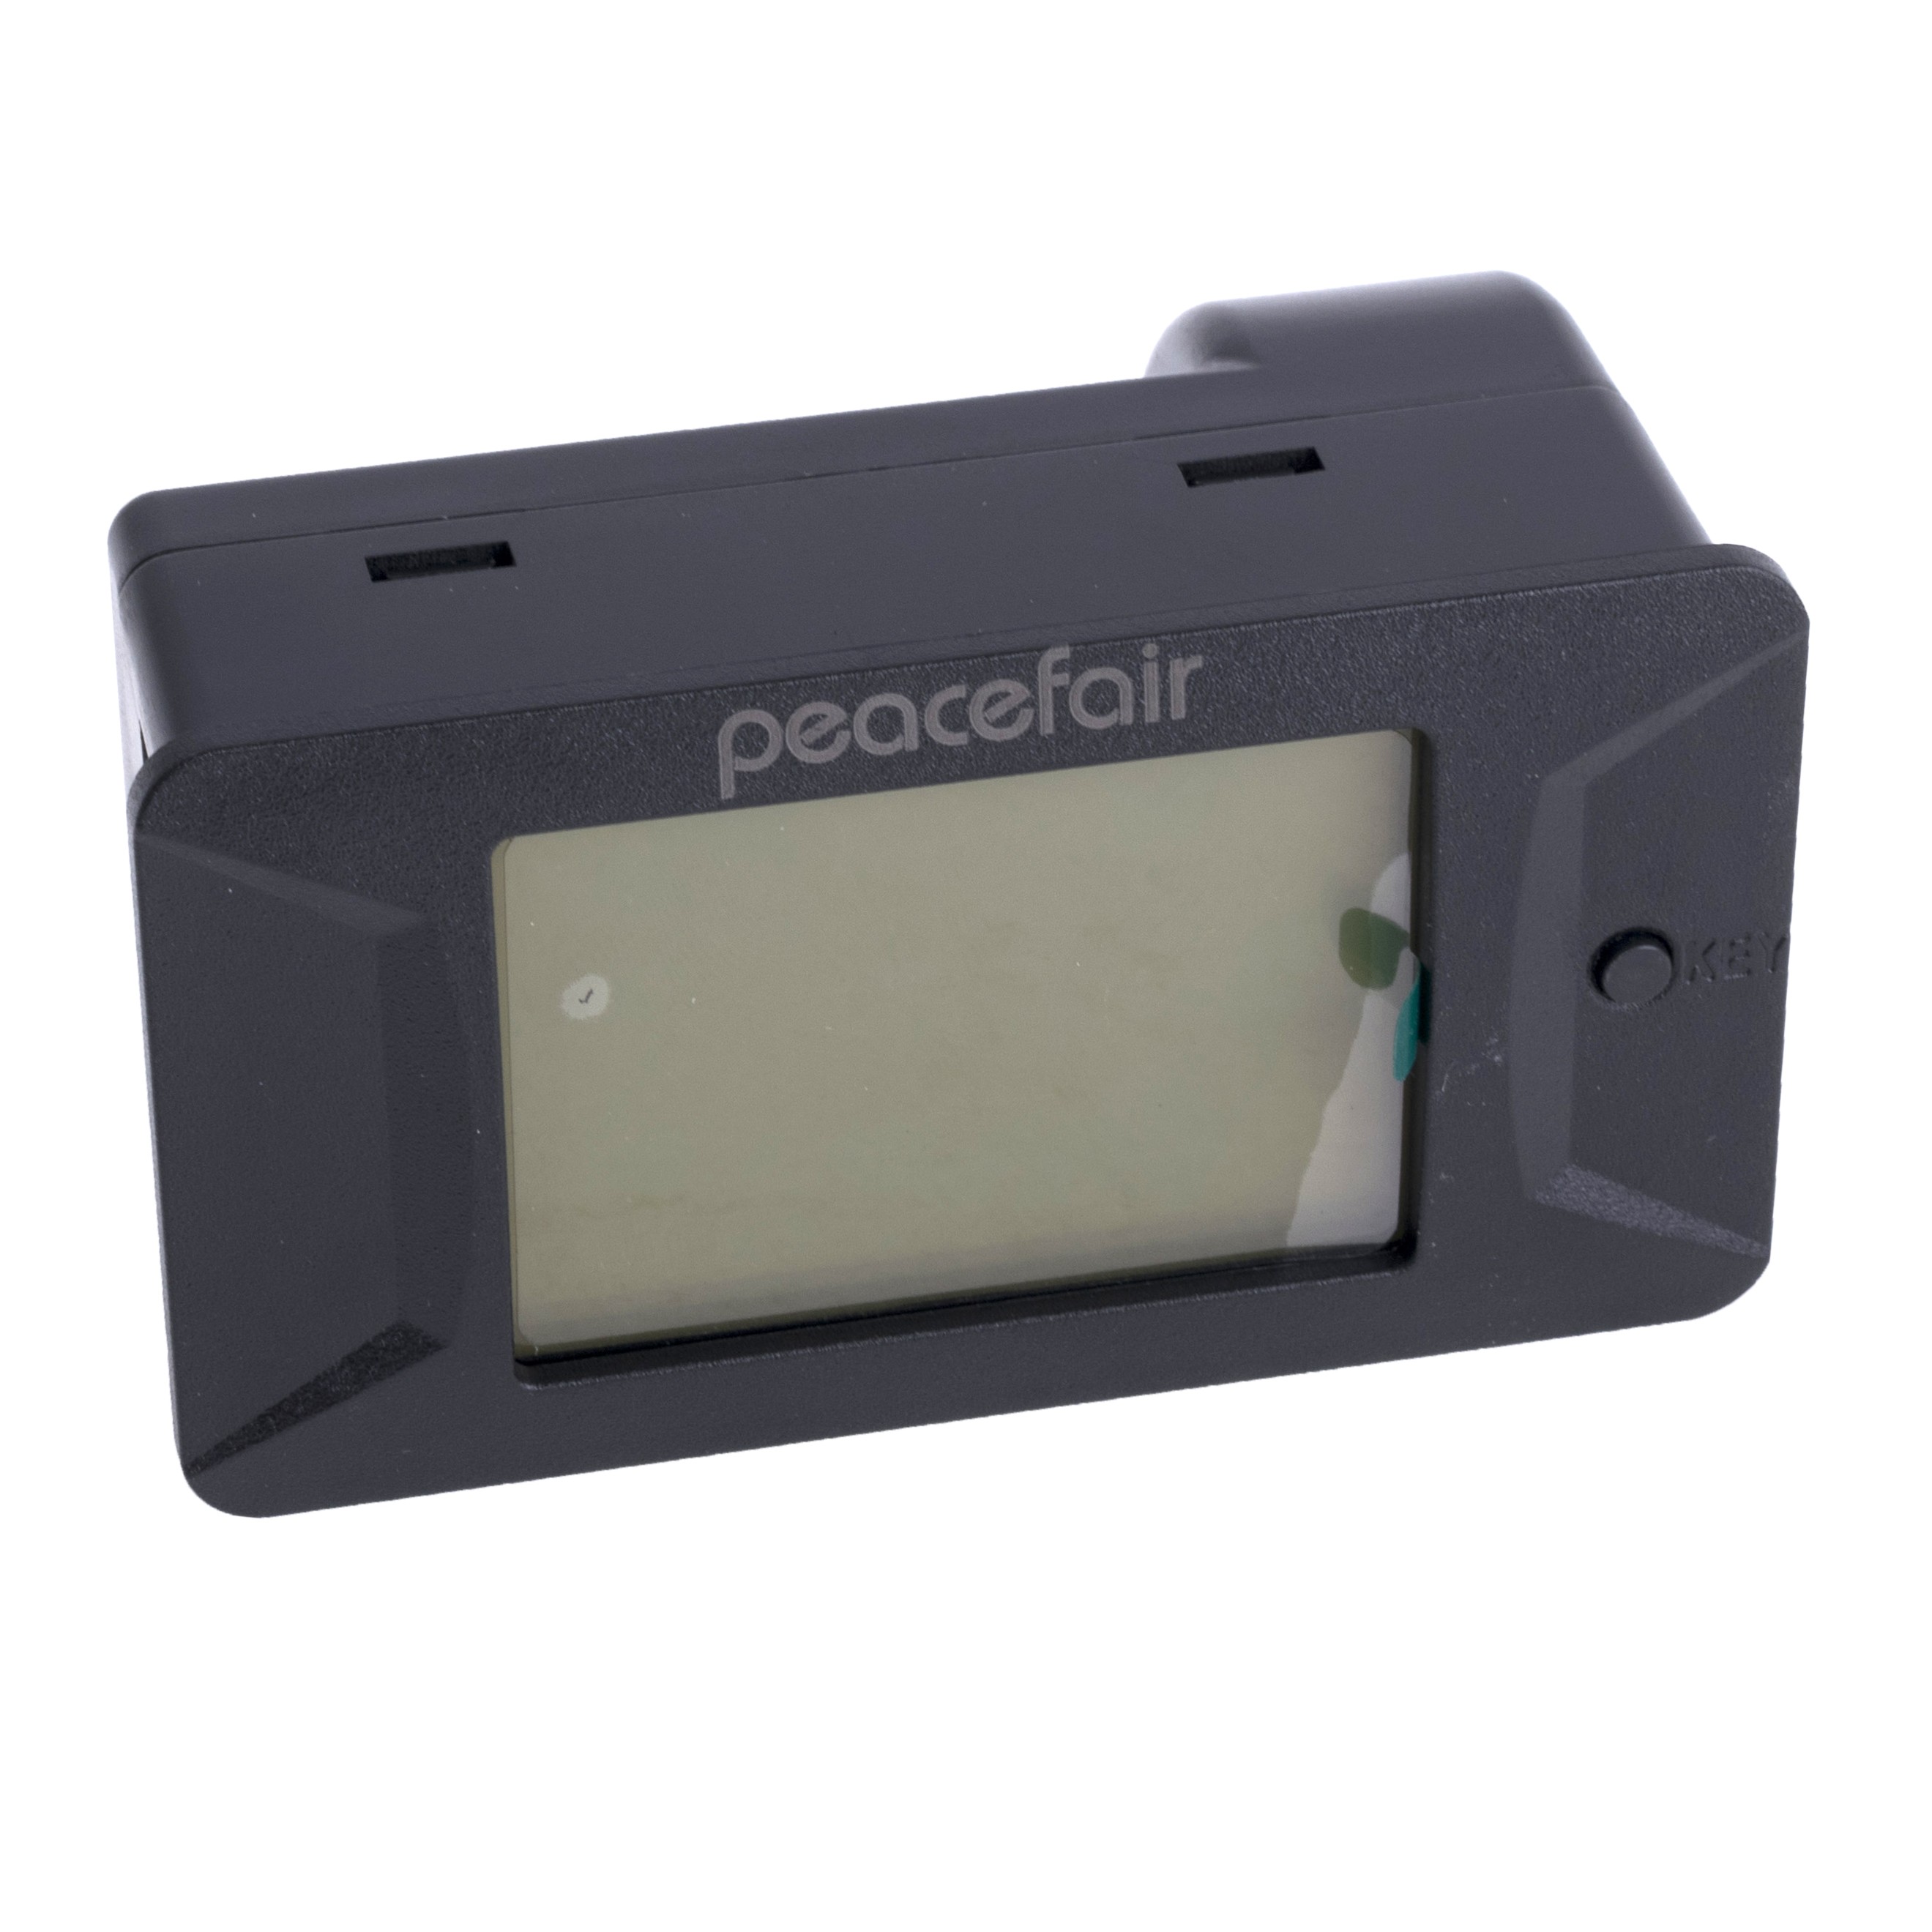 Вимірювальна панель PZEM-026 (Peacefair) 40-400VAC, 100A